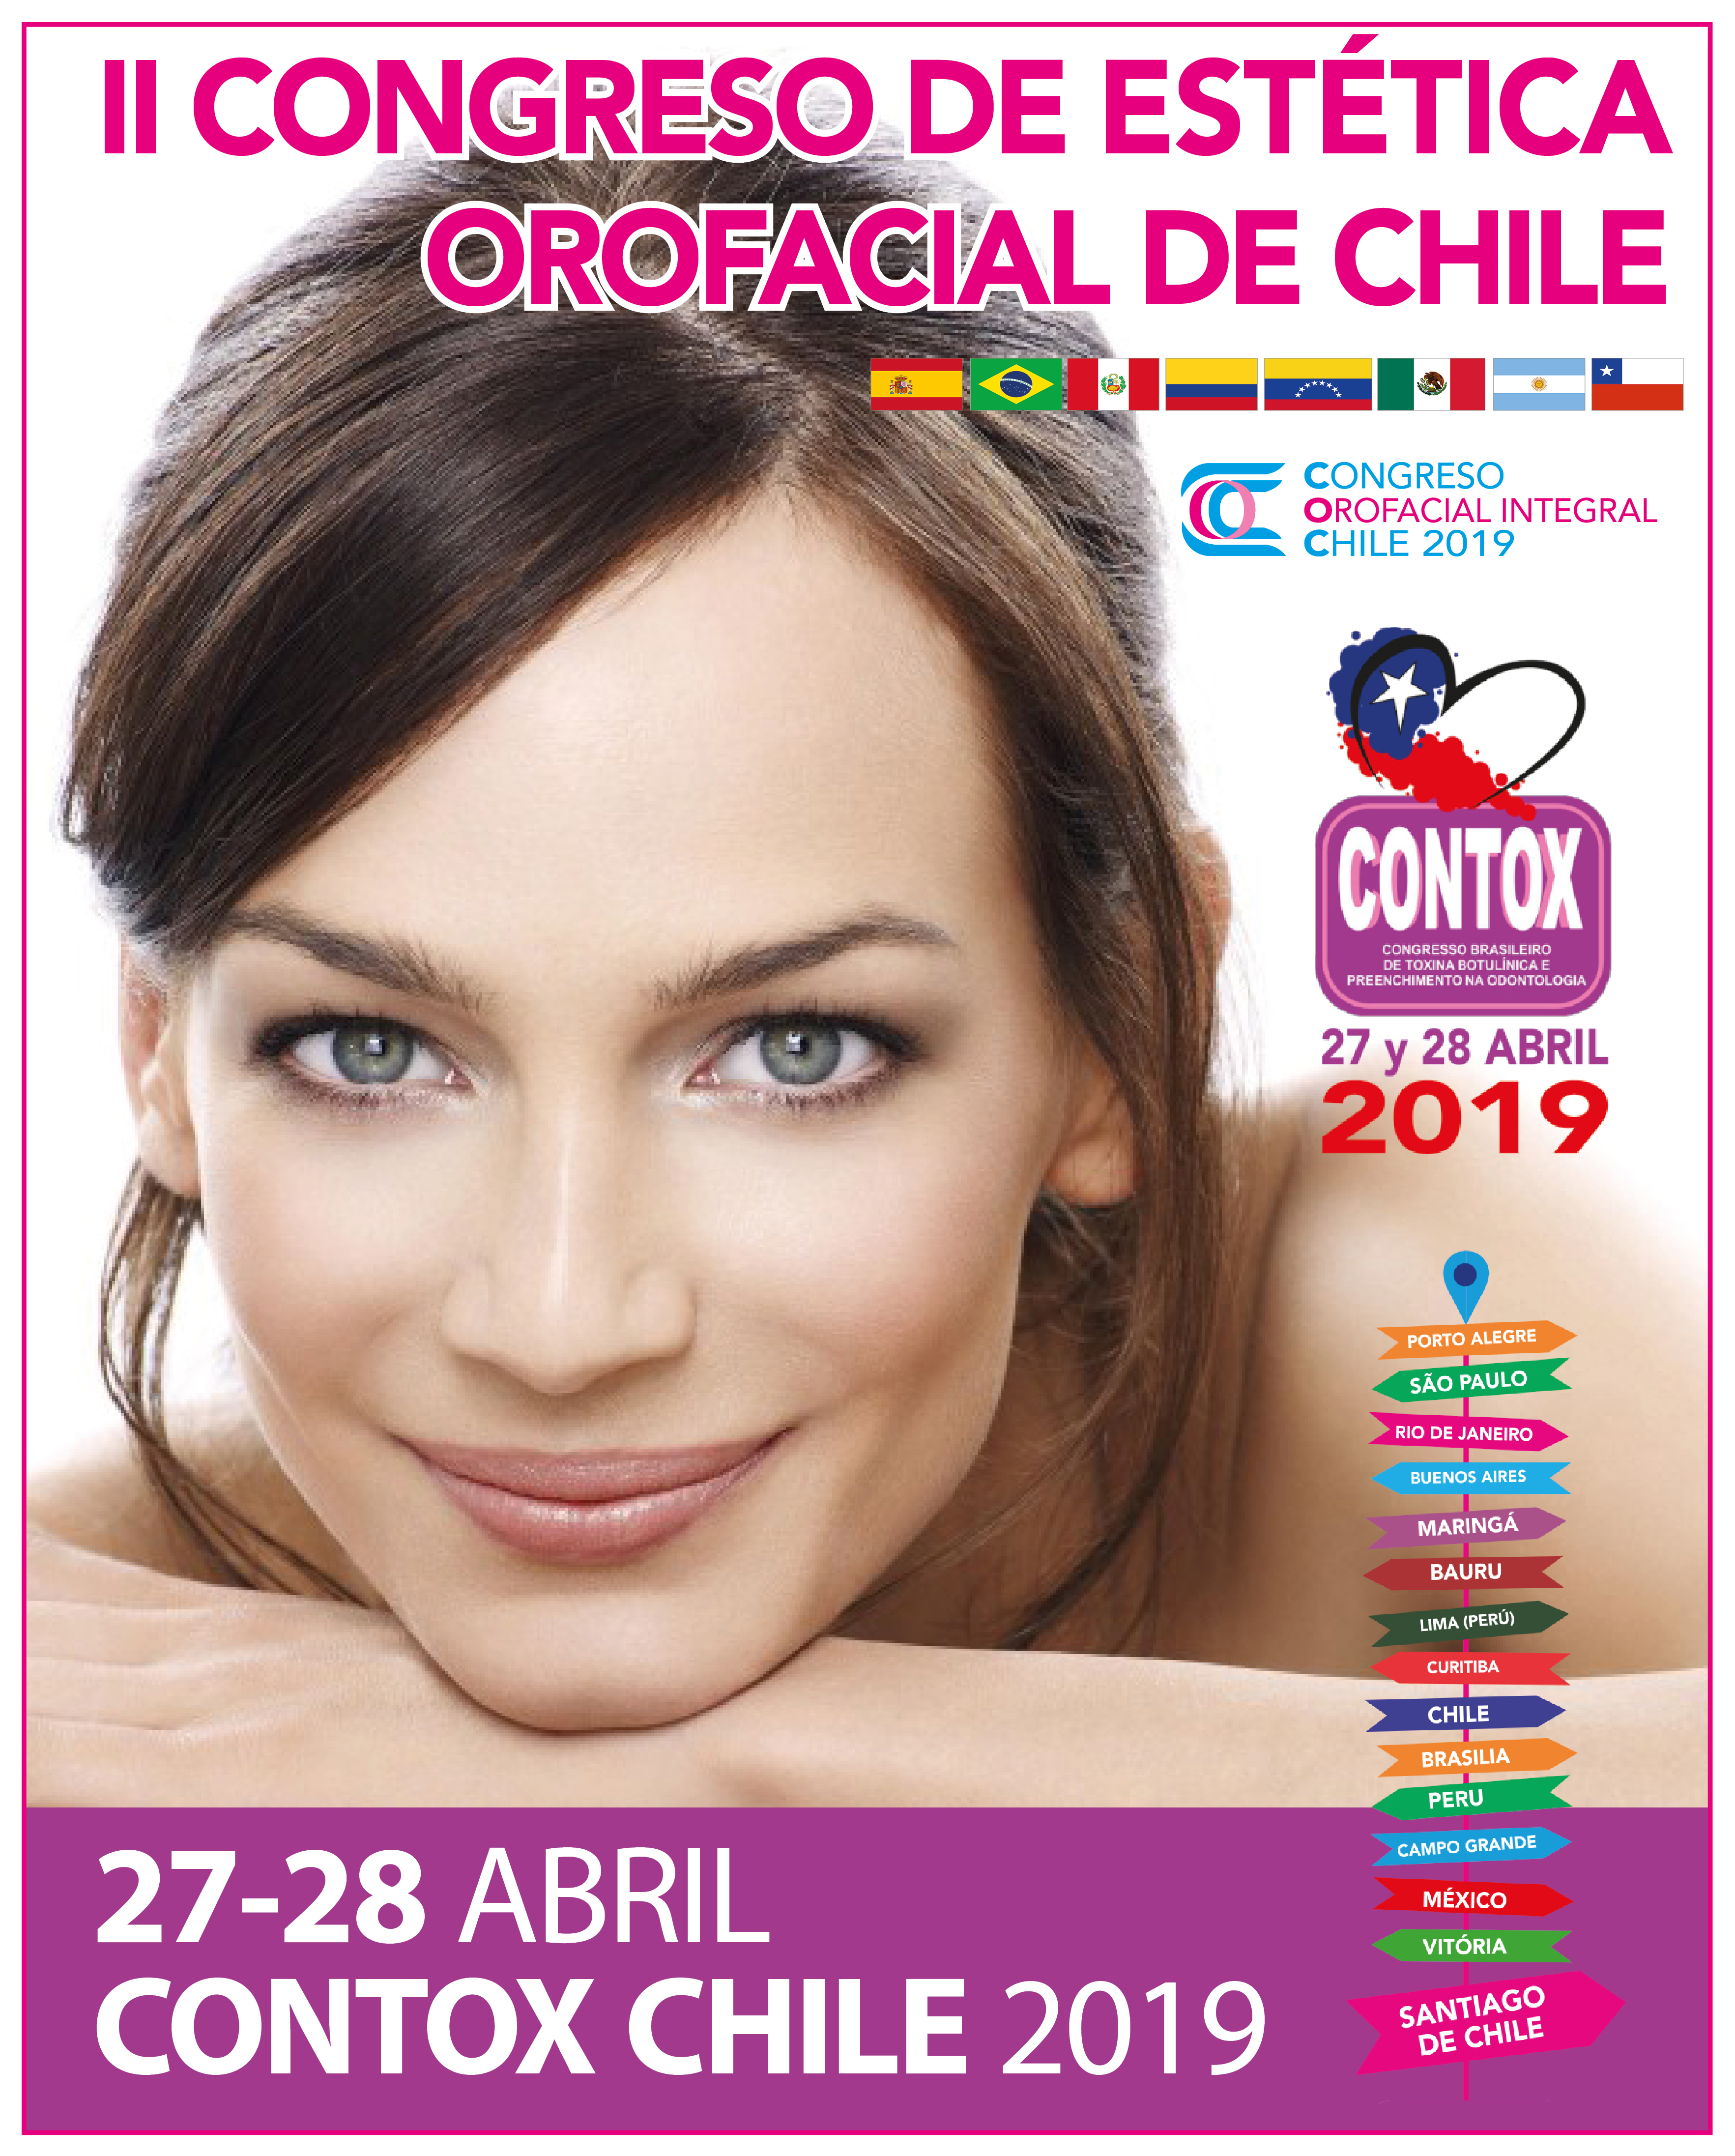 II Congreso de estética orofacial de Chile